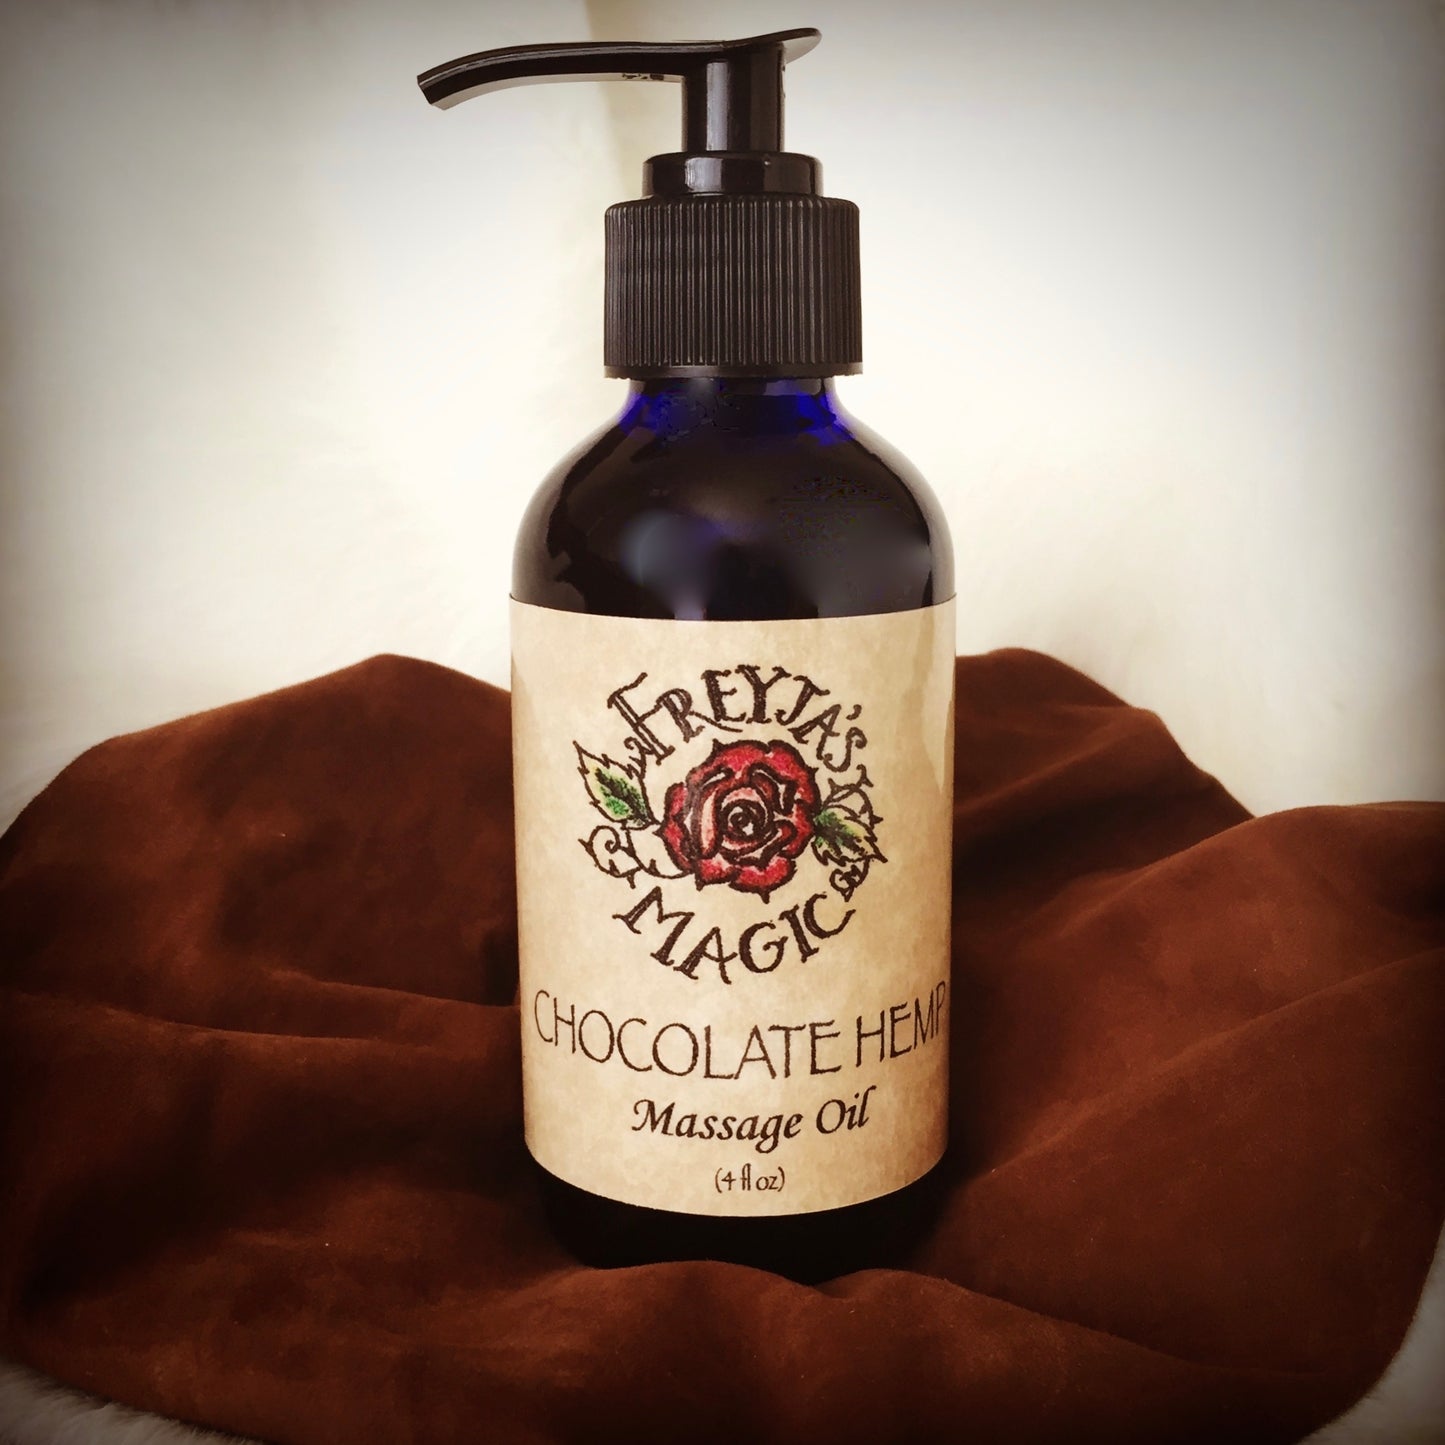 Chocolate Hemp Massage & Body Oil | Silky, Sensual, Romantic | Couples Massage Oil, Bath and Body Oil, Freyja's Magic Oil